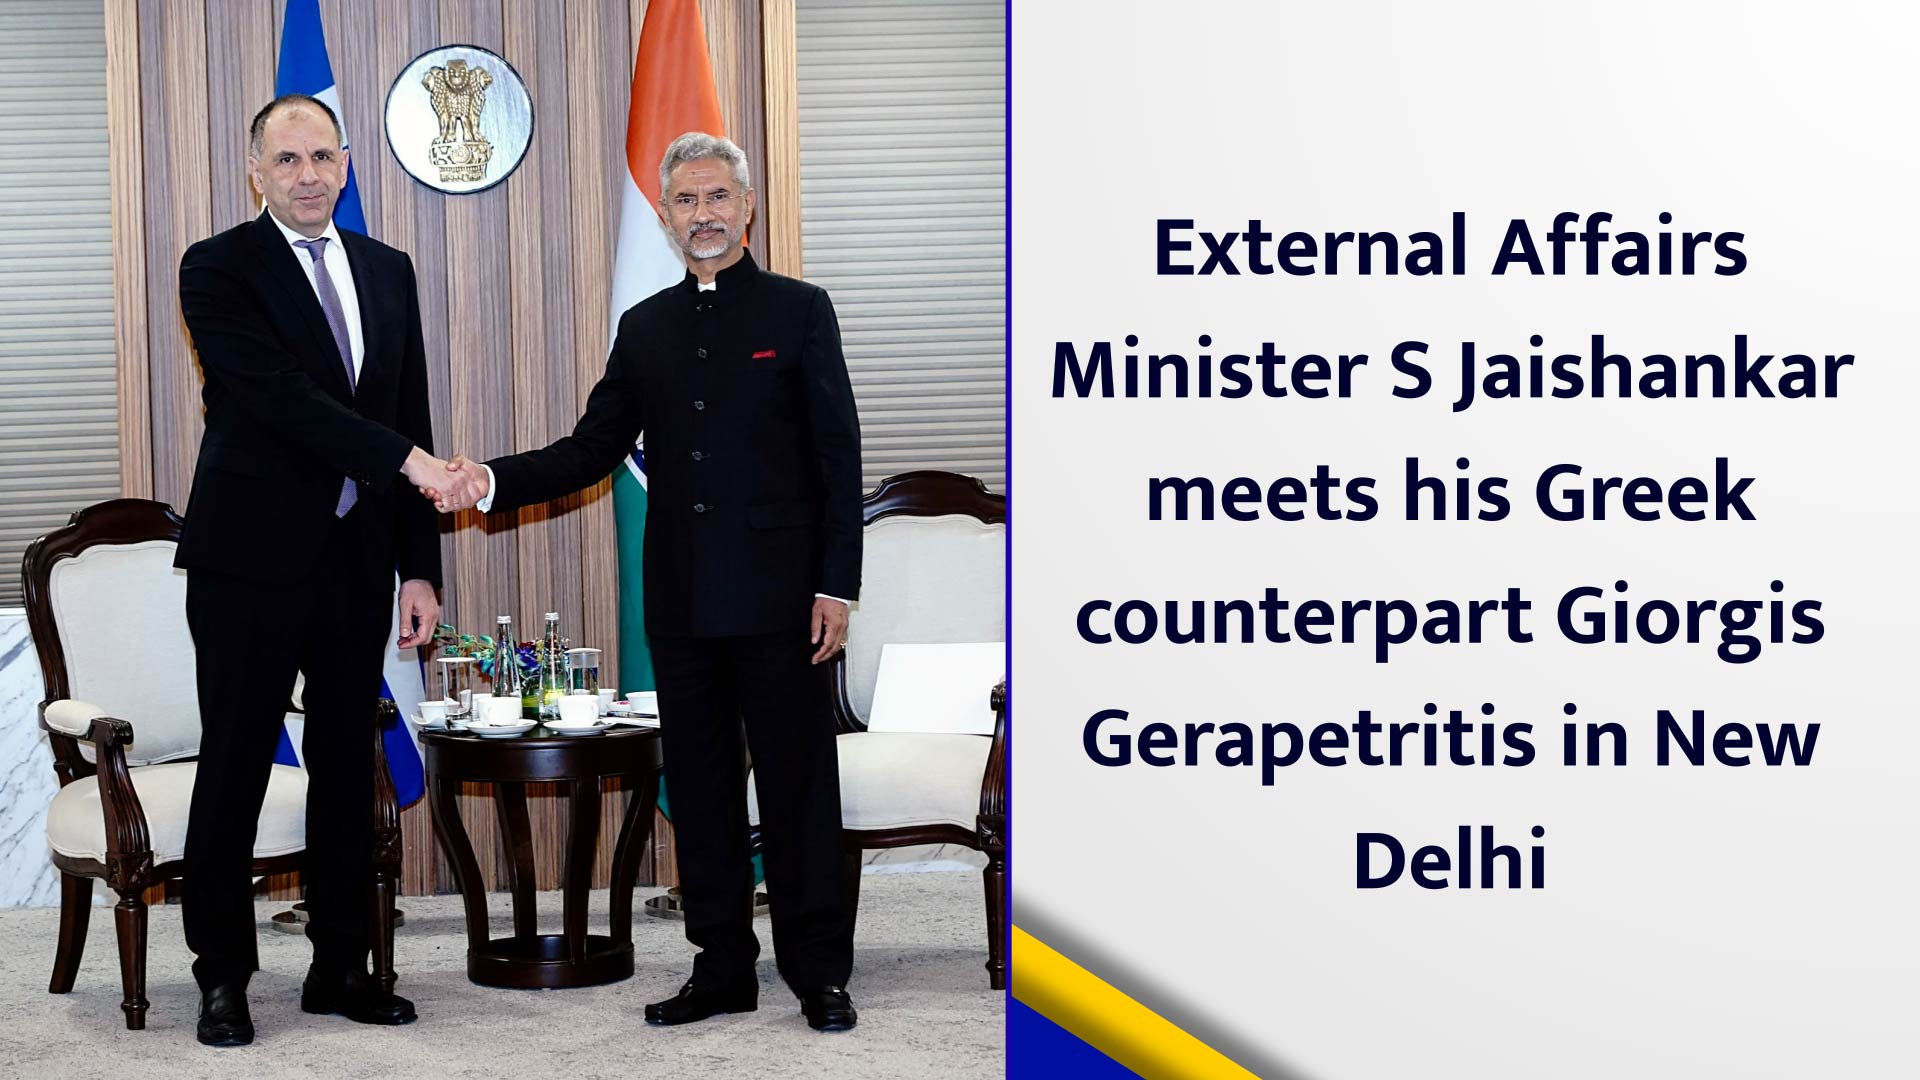 External Affairs Minister S Jaishankar meets his Greek counterpart Giorgis Gerapetritis in New Delhi